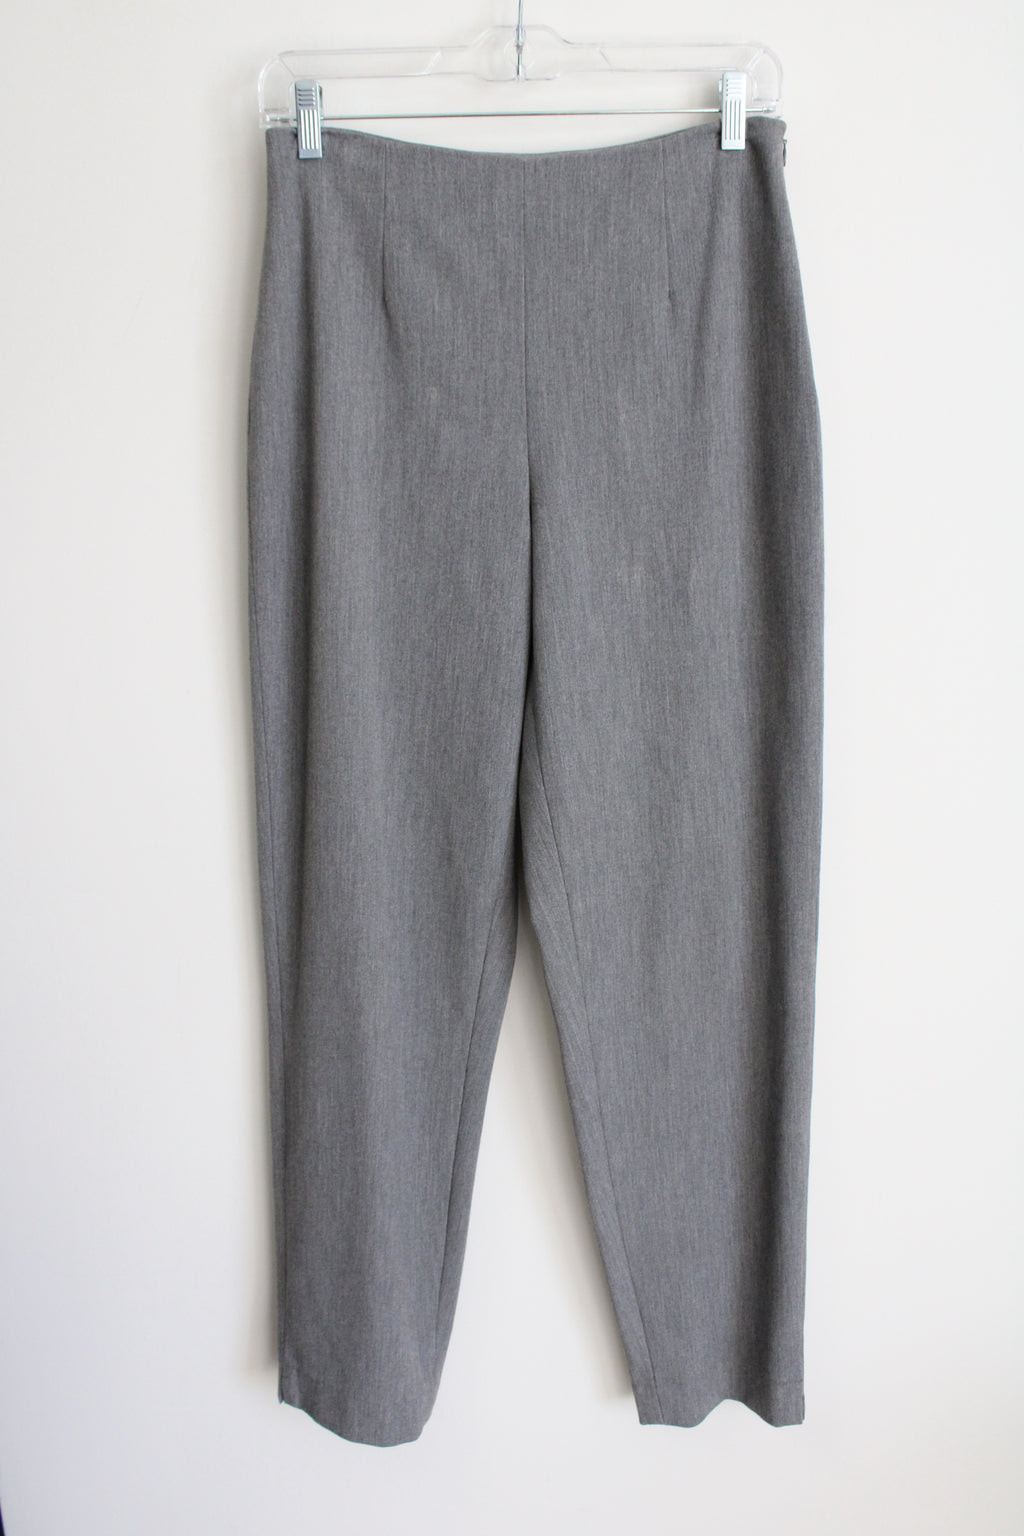 Talbots Stretch Gray Trouser Pant | 6